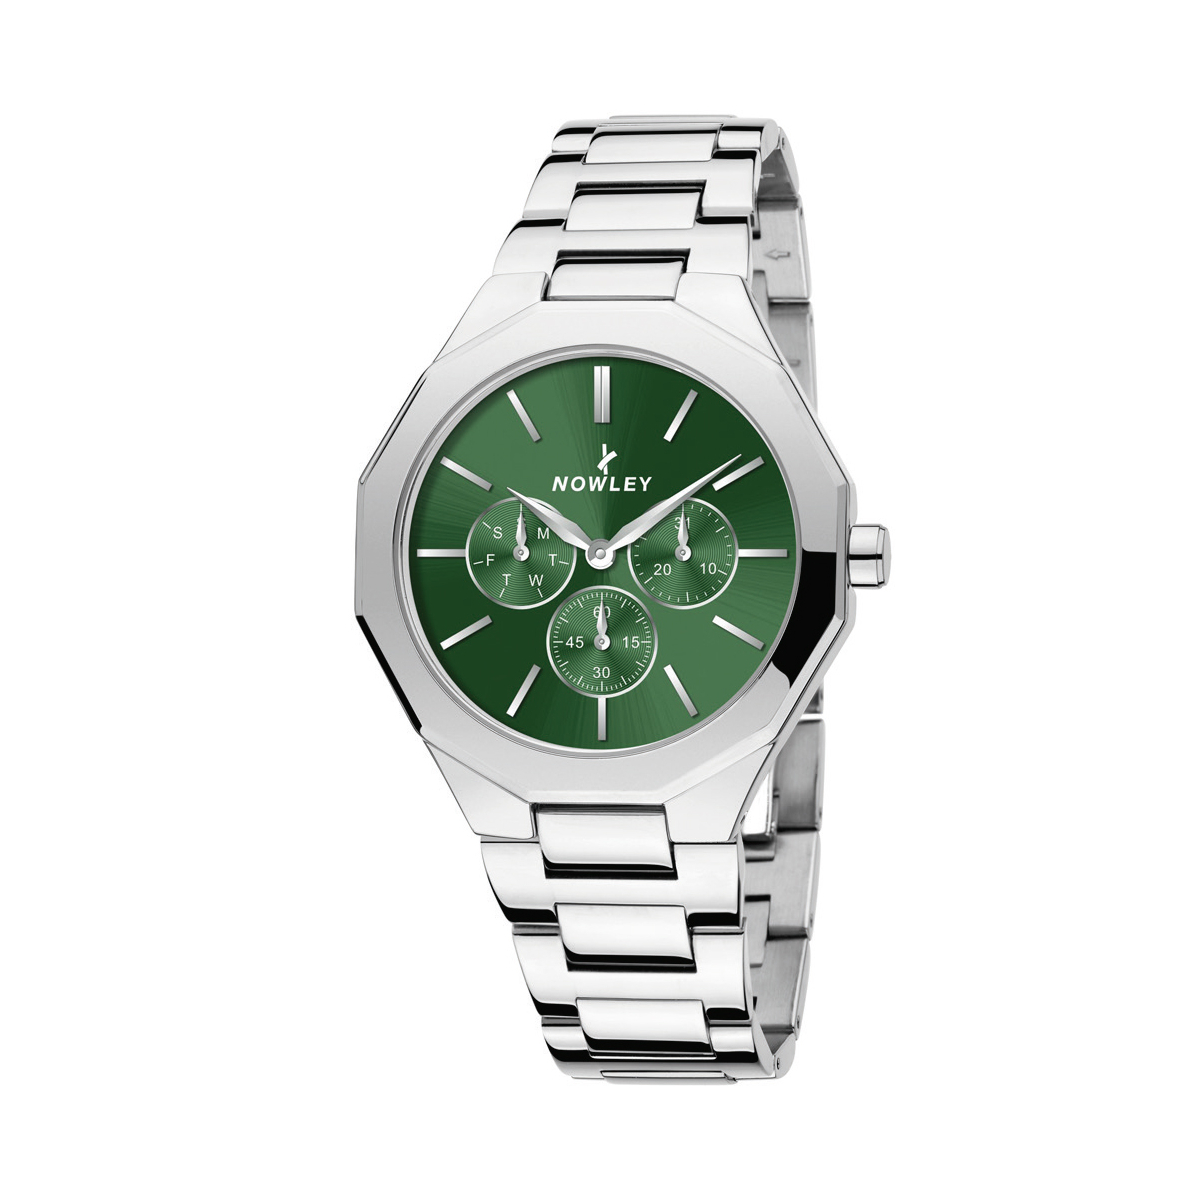 NOWLEY Gents Watch 8-0065-04. Men's Dress Watch Men's Fashion Watch Designer Watches For Men Nowley Men's Prisma Watch Green dial - front view